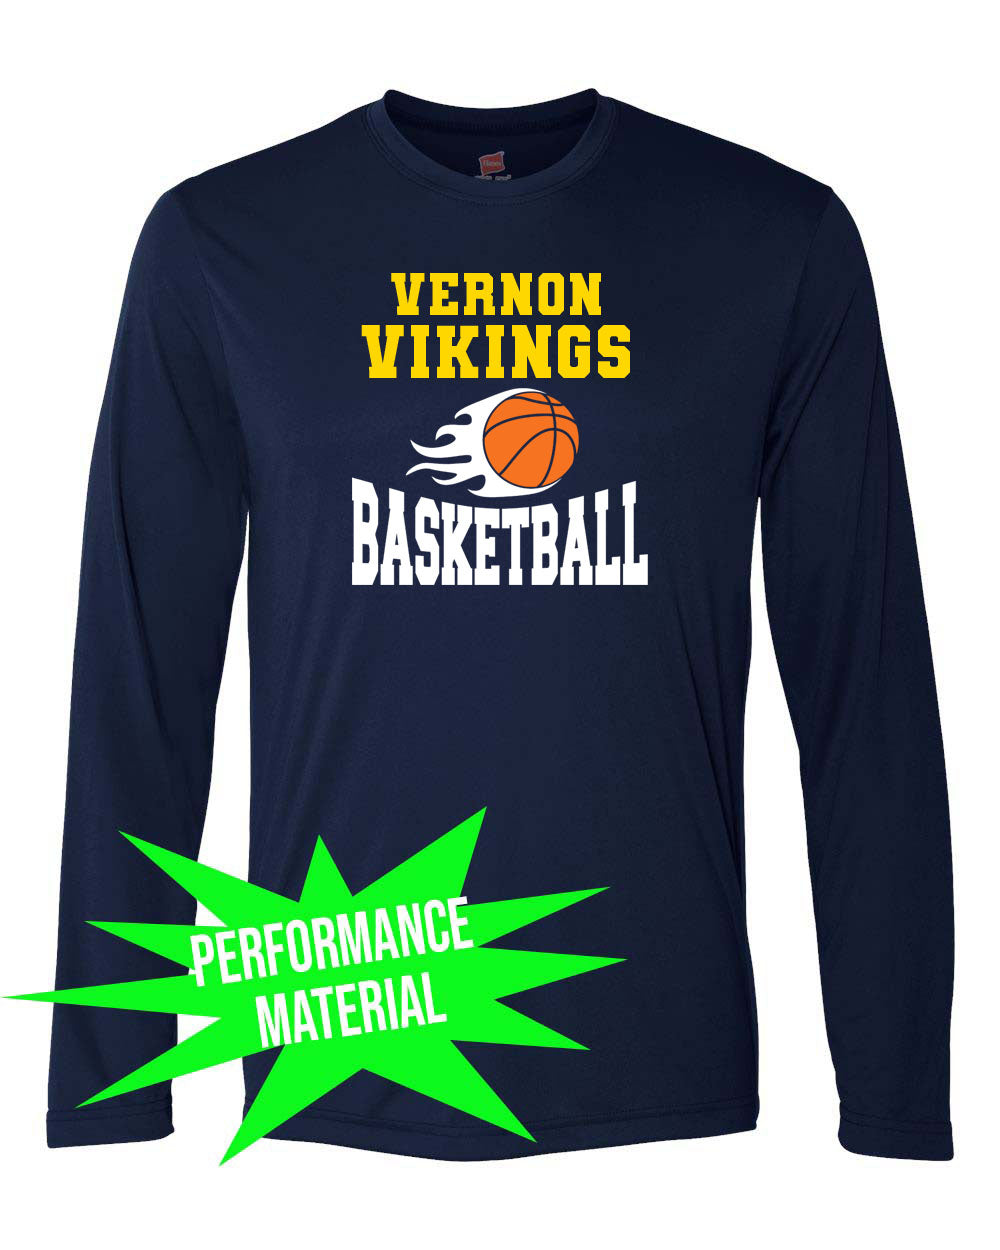 Vikings Basketball Performance Material Design 4 Long Sleeve Shirt